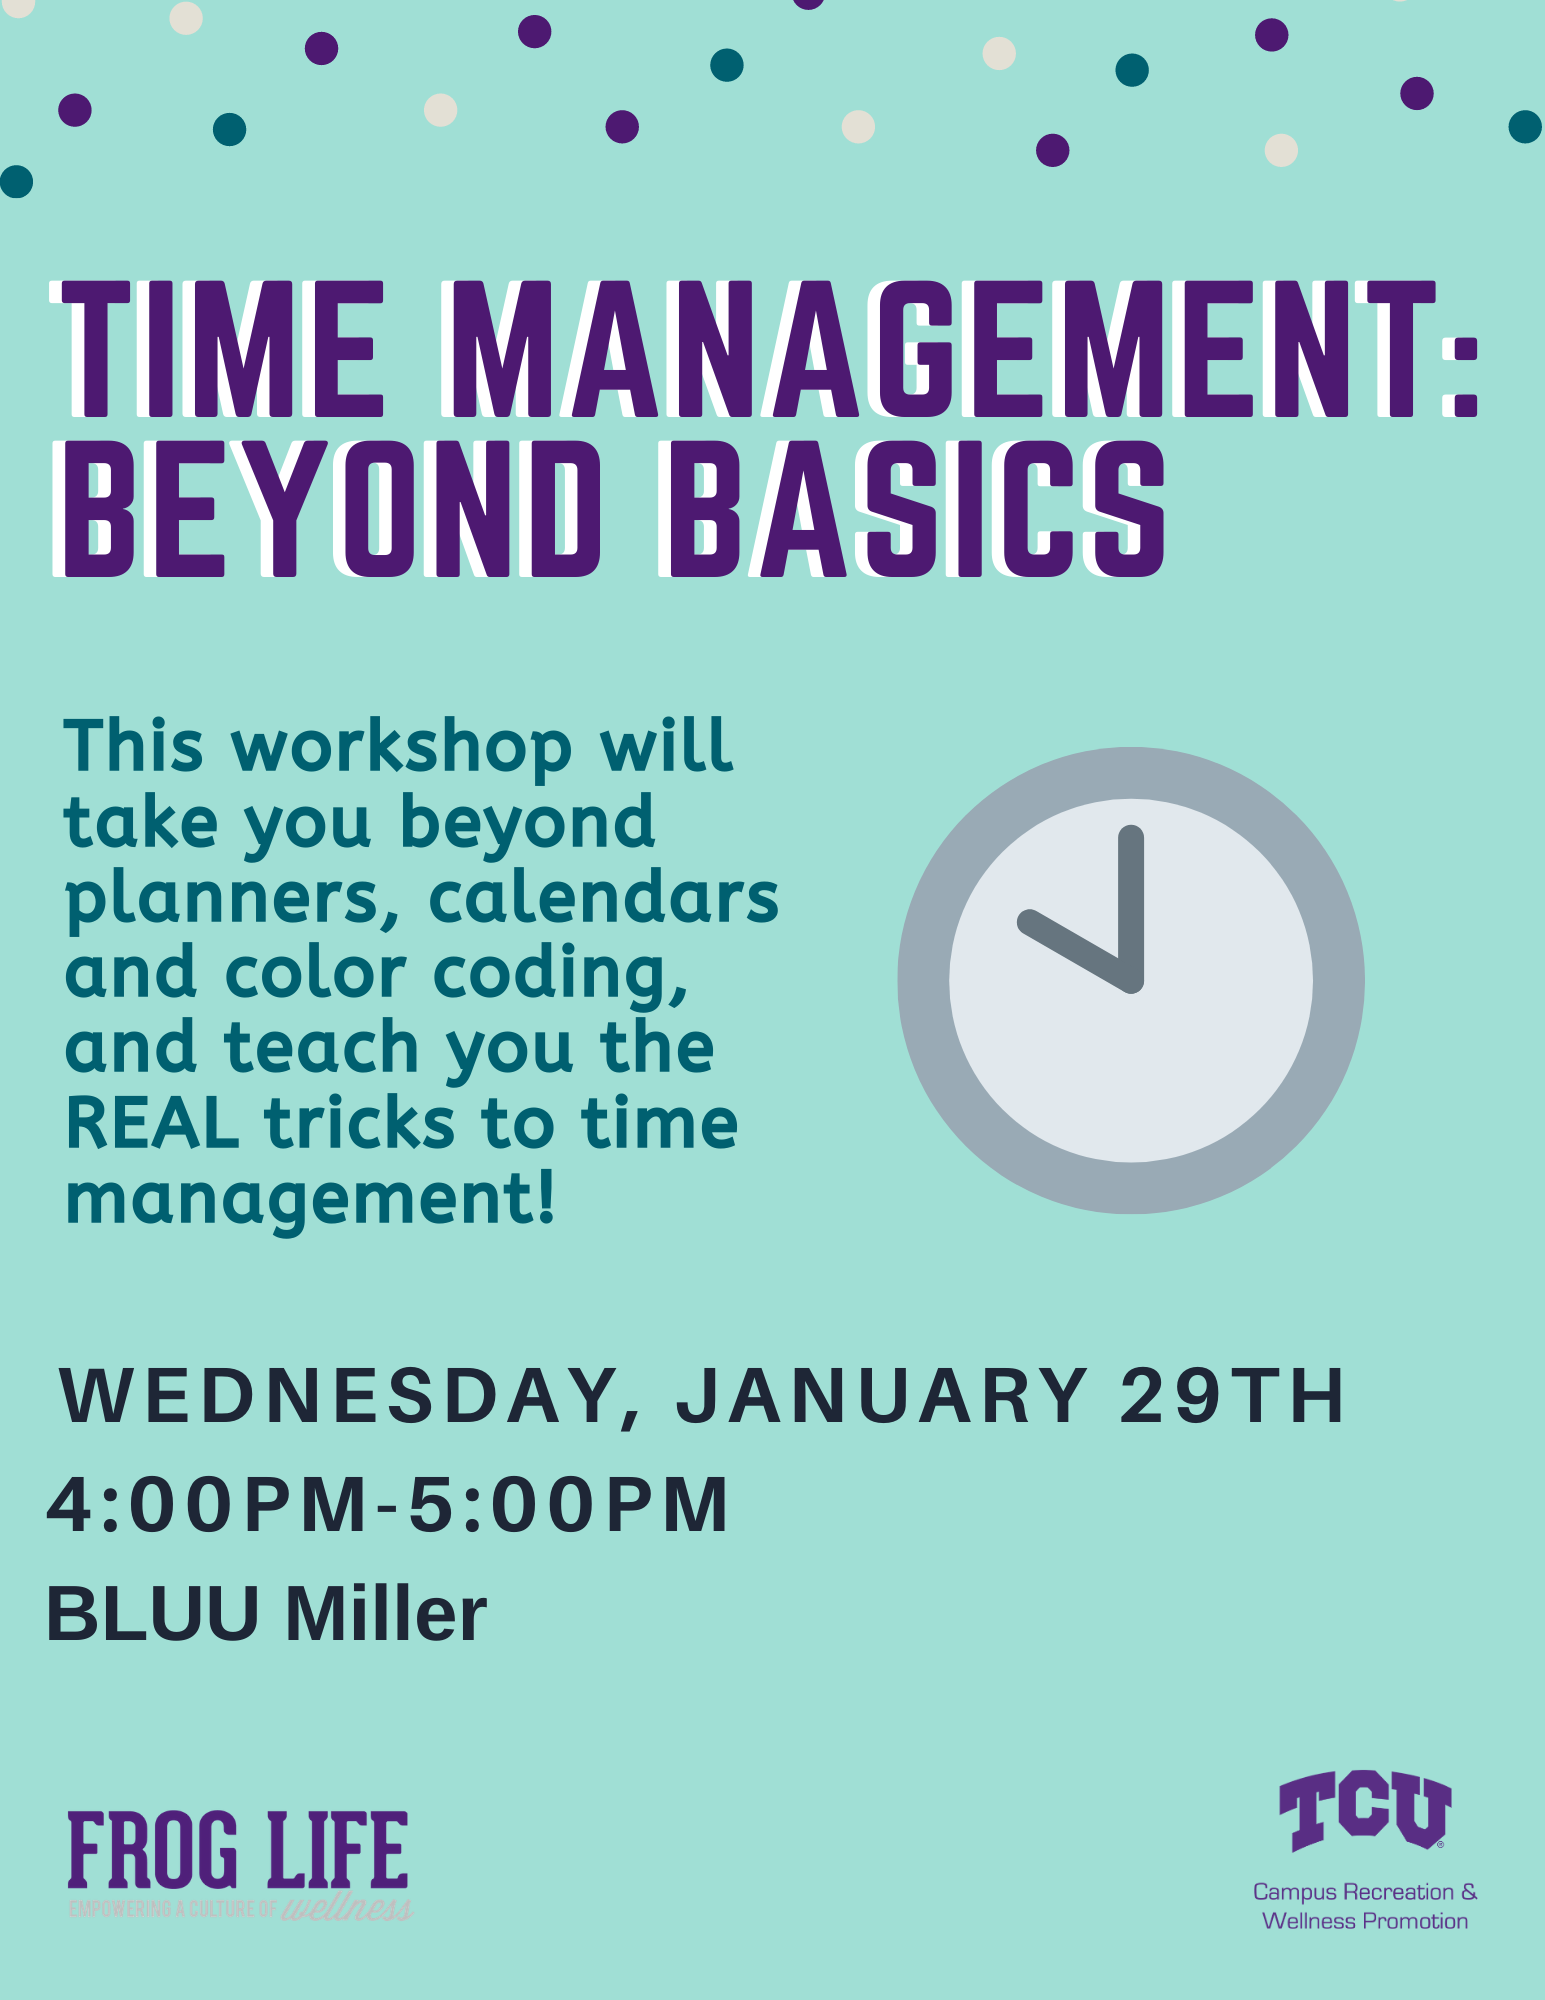 Time management beyond basics